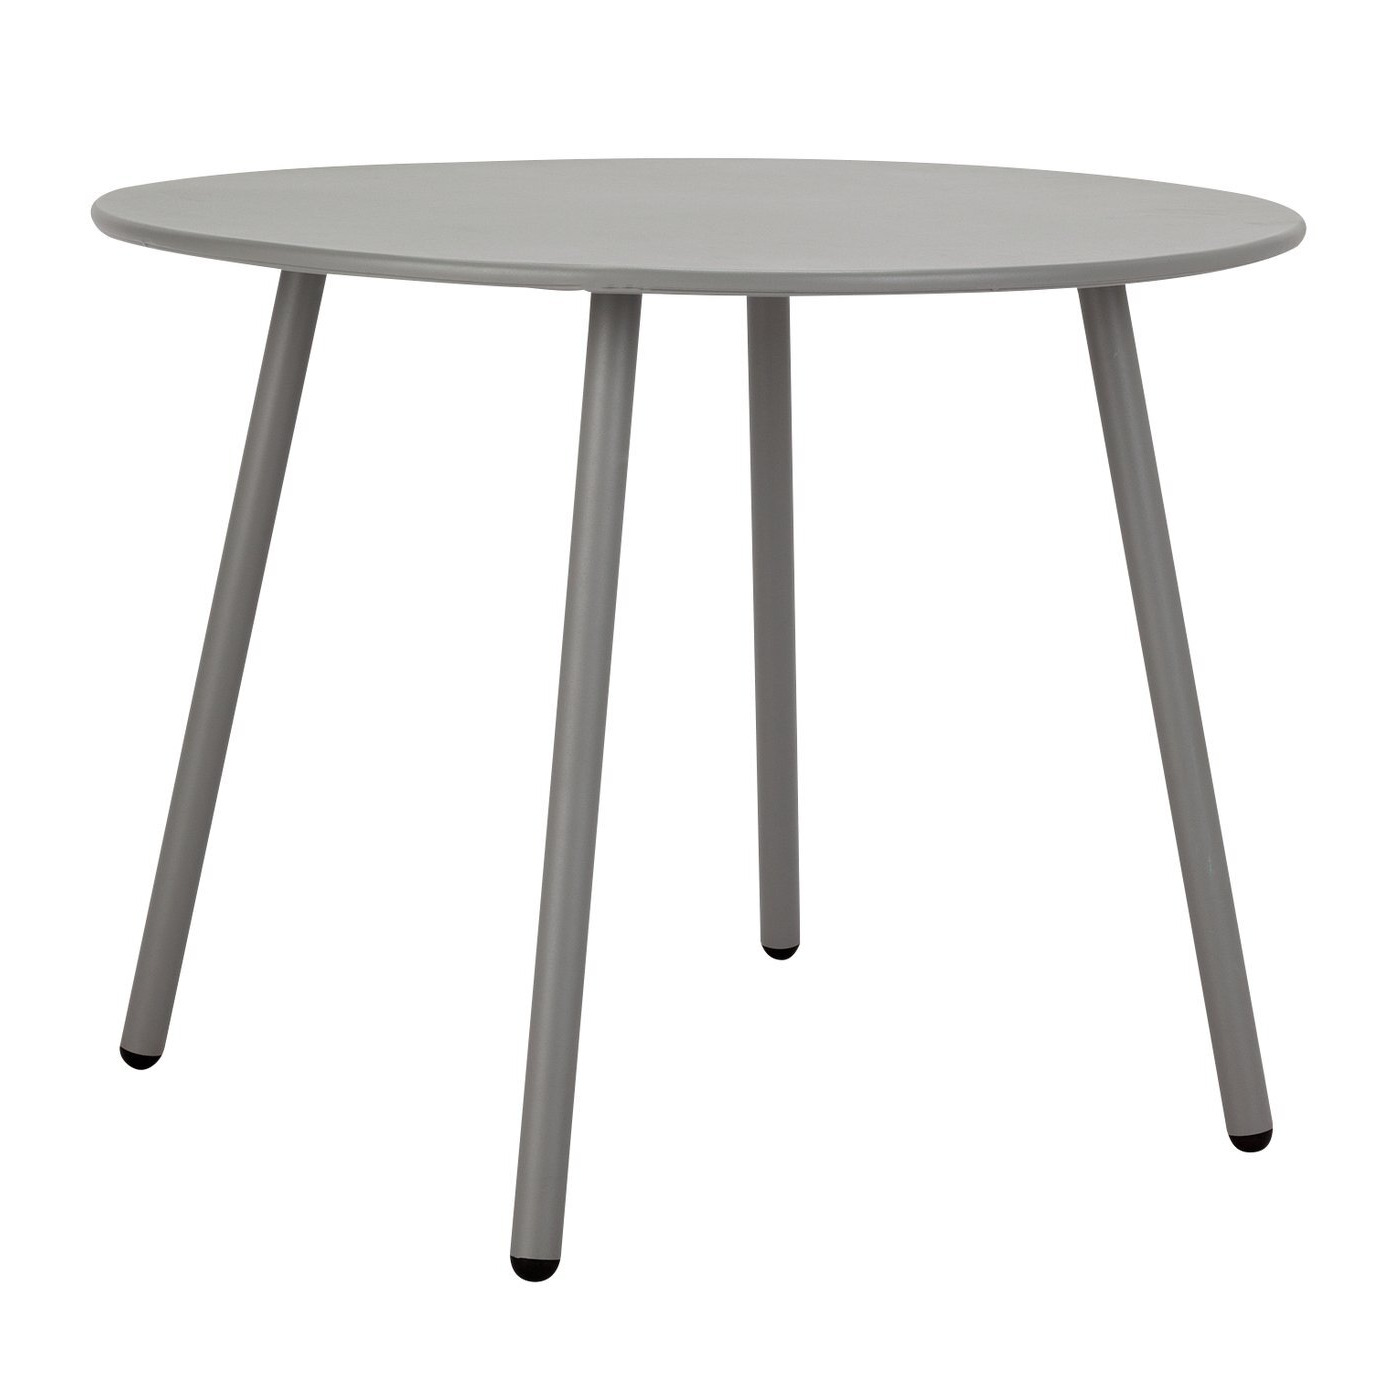 Argos Home Ipanema 4 Seater Metal Garden Table - Grey - image 1